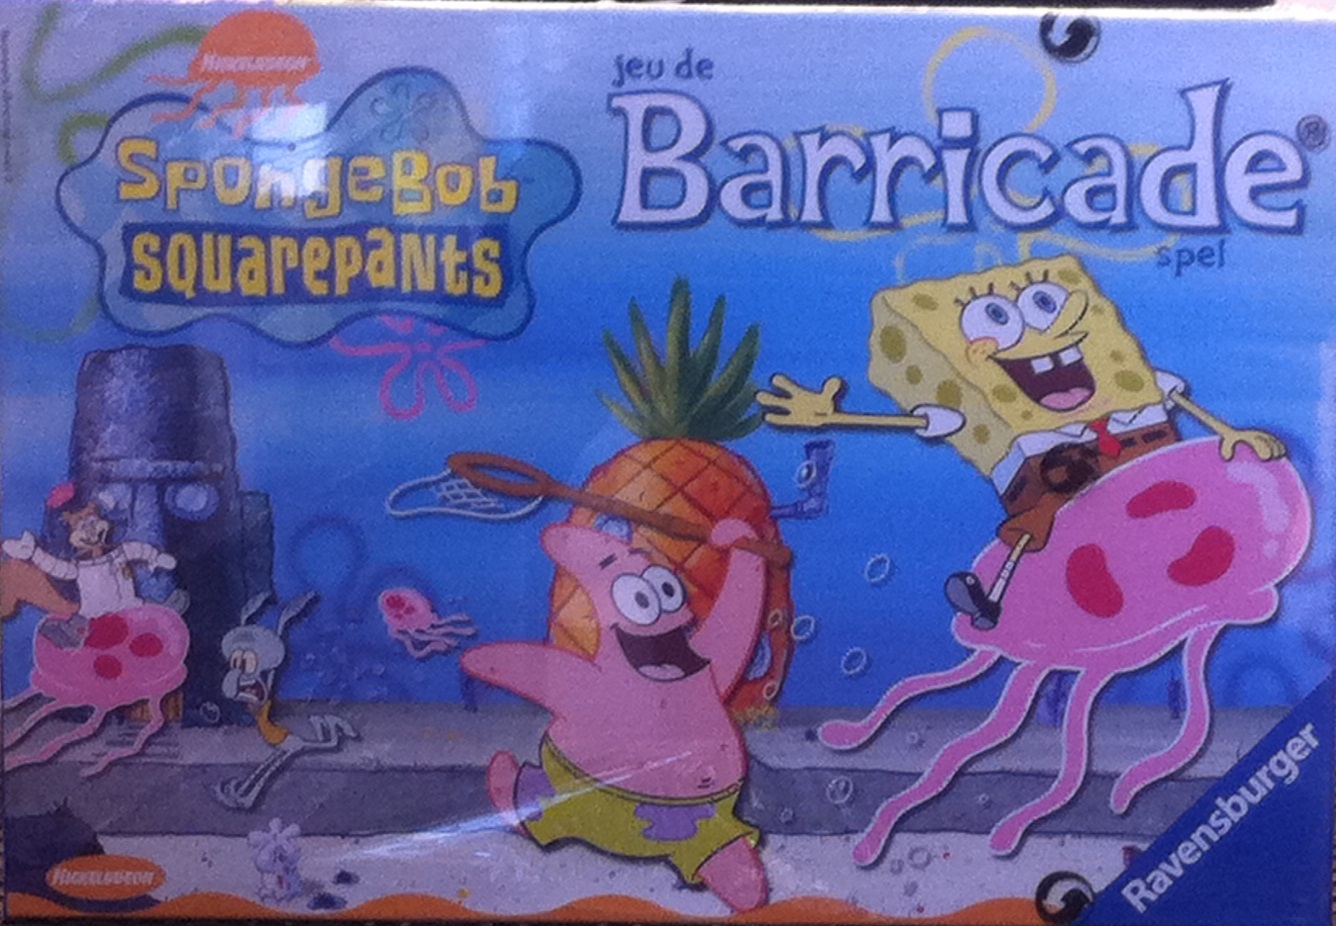 Caius analoog crisis Spongebob - Jeu de Barricade spel - Speelgoed Liefhebbers